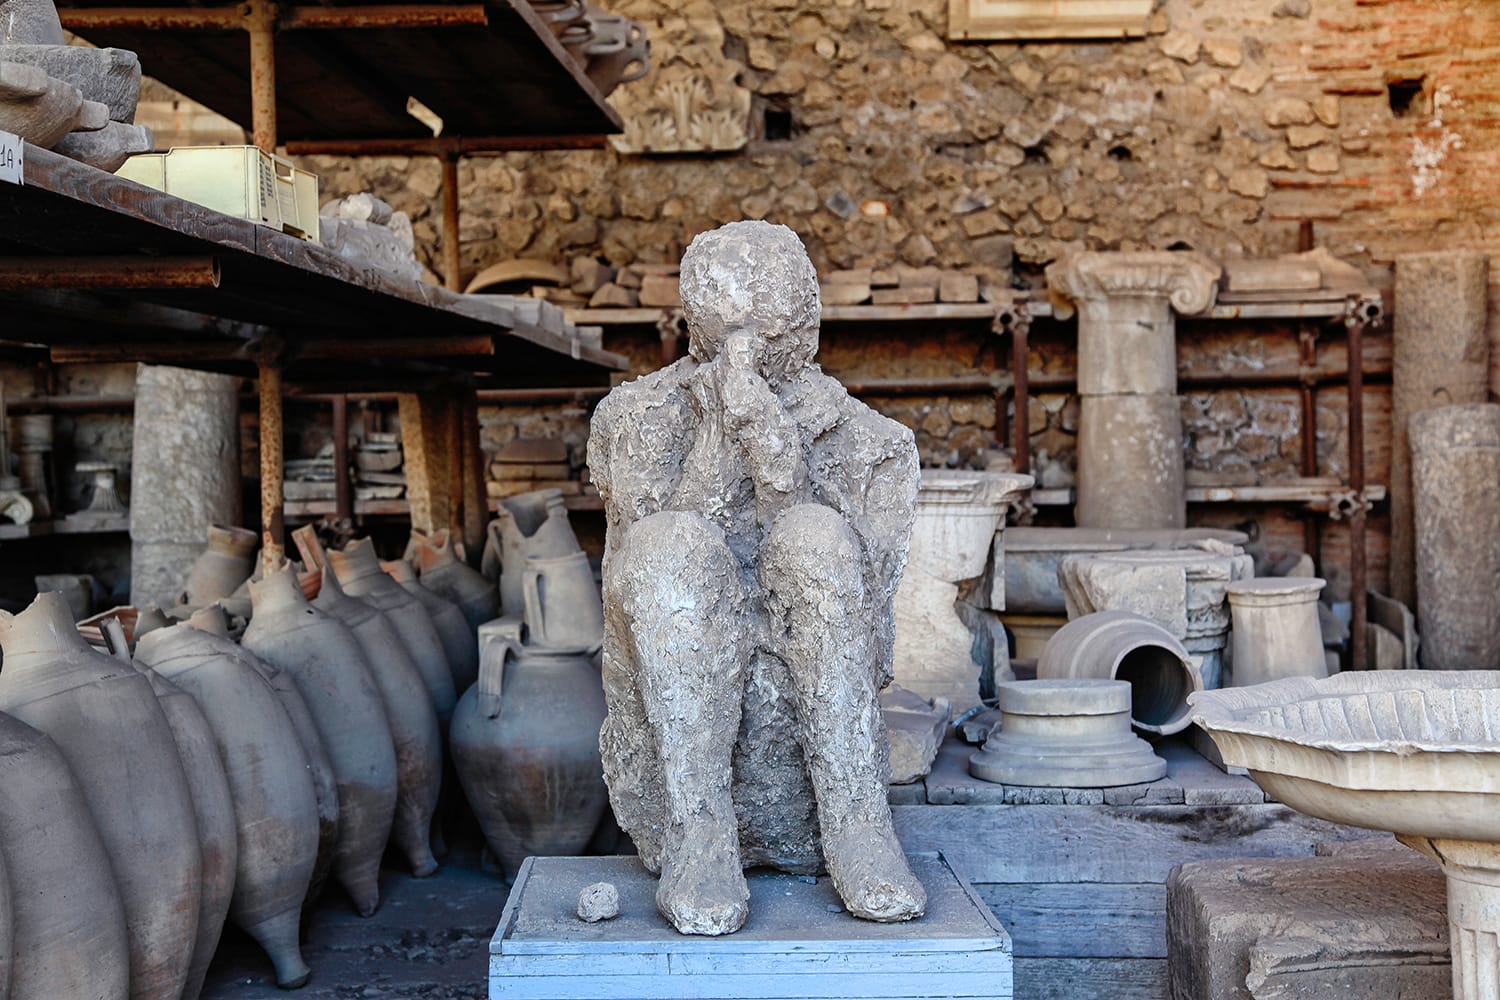 Molded body in Pompeii, Campania, Italy